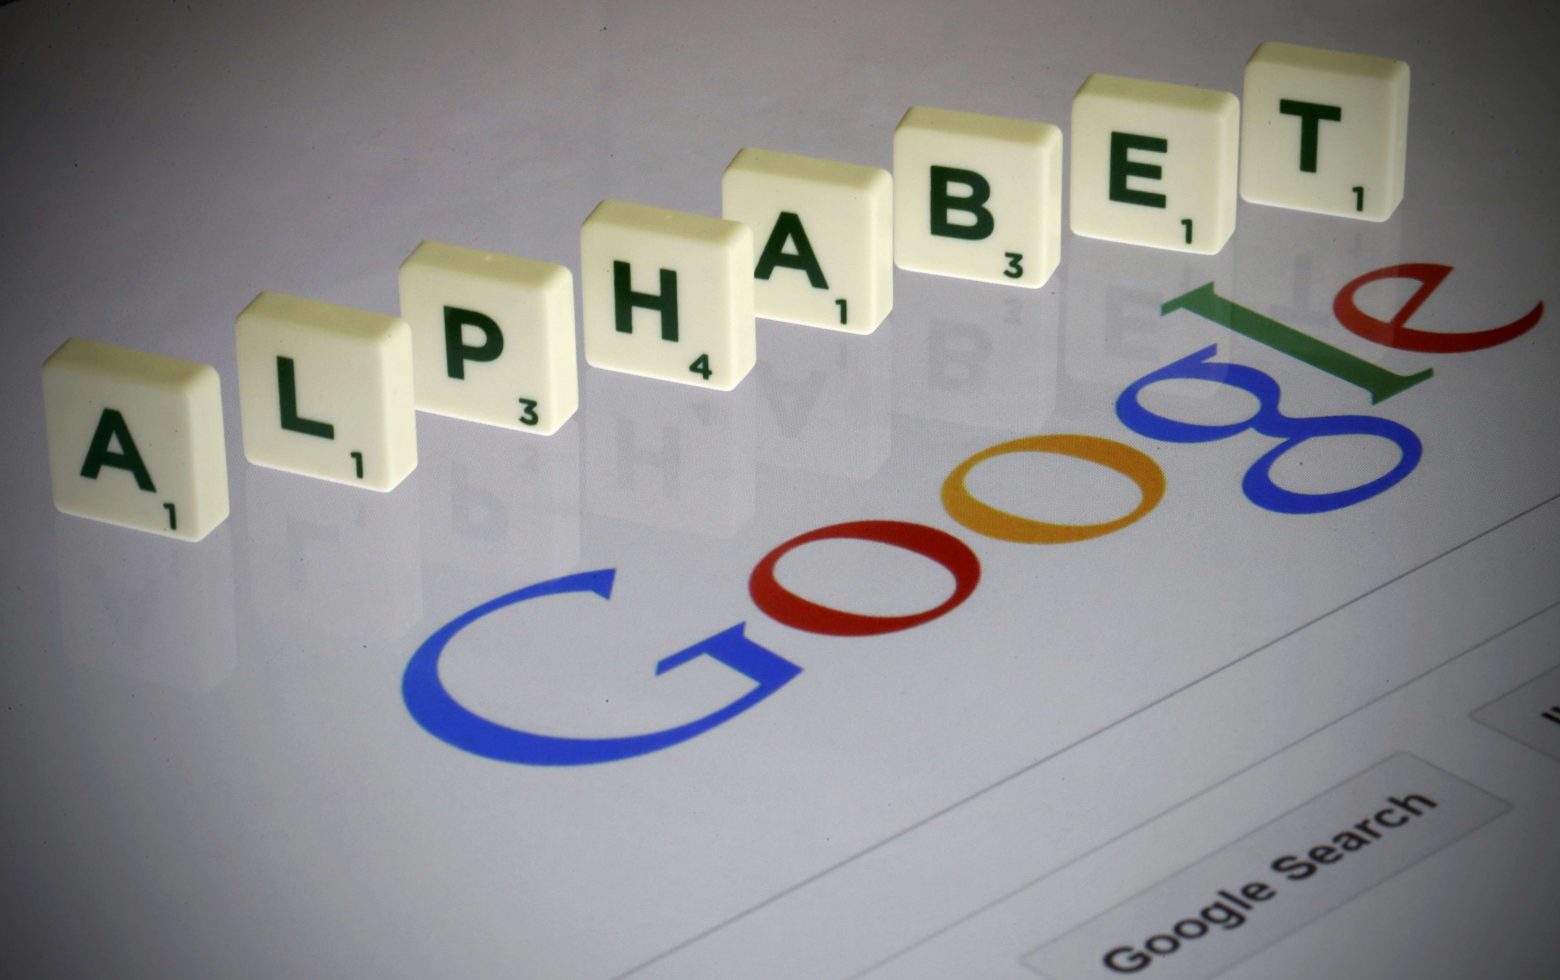 Alphabet: Κέρδη-ρεκόρ για τον όμιλο της Google χάρη στην πανδημία